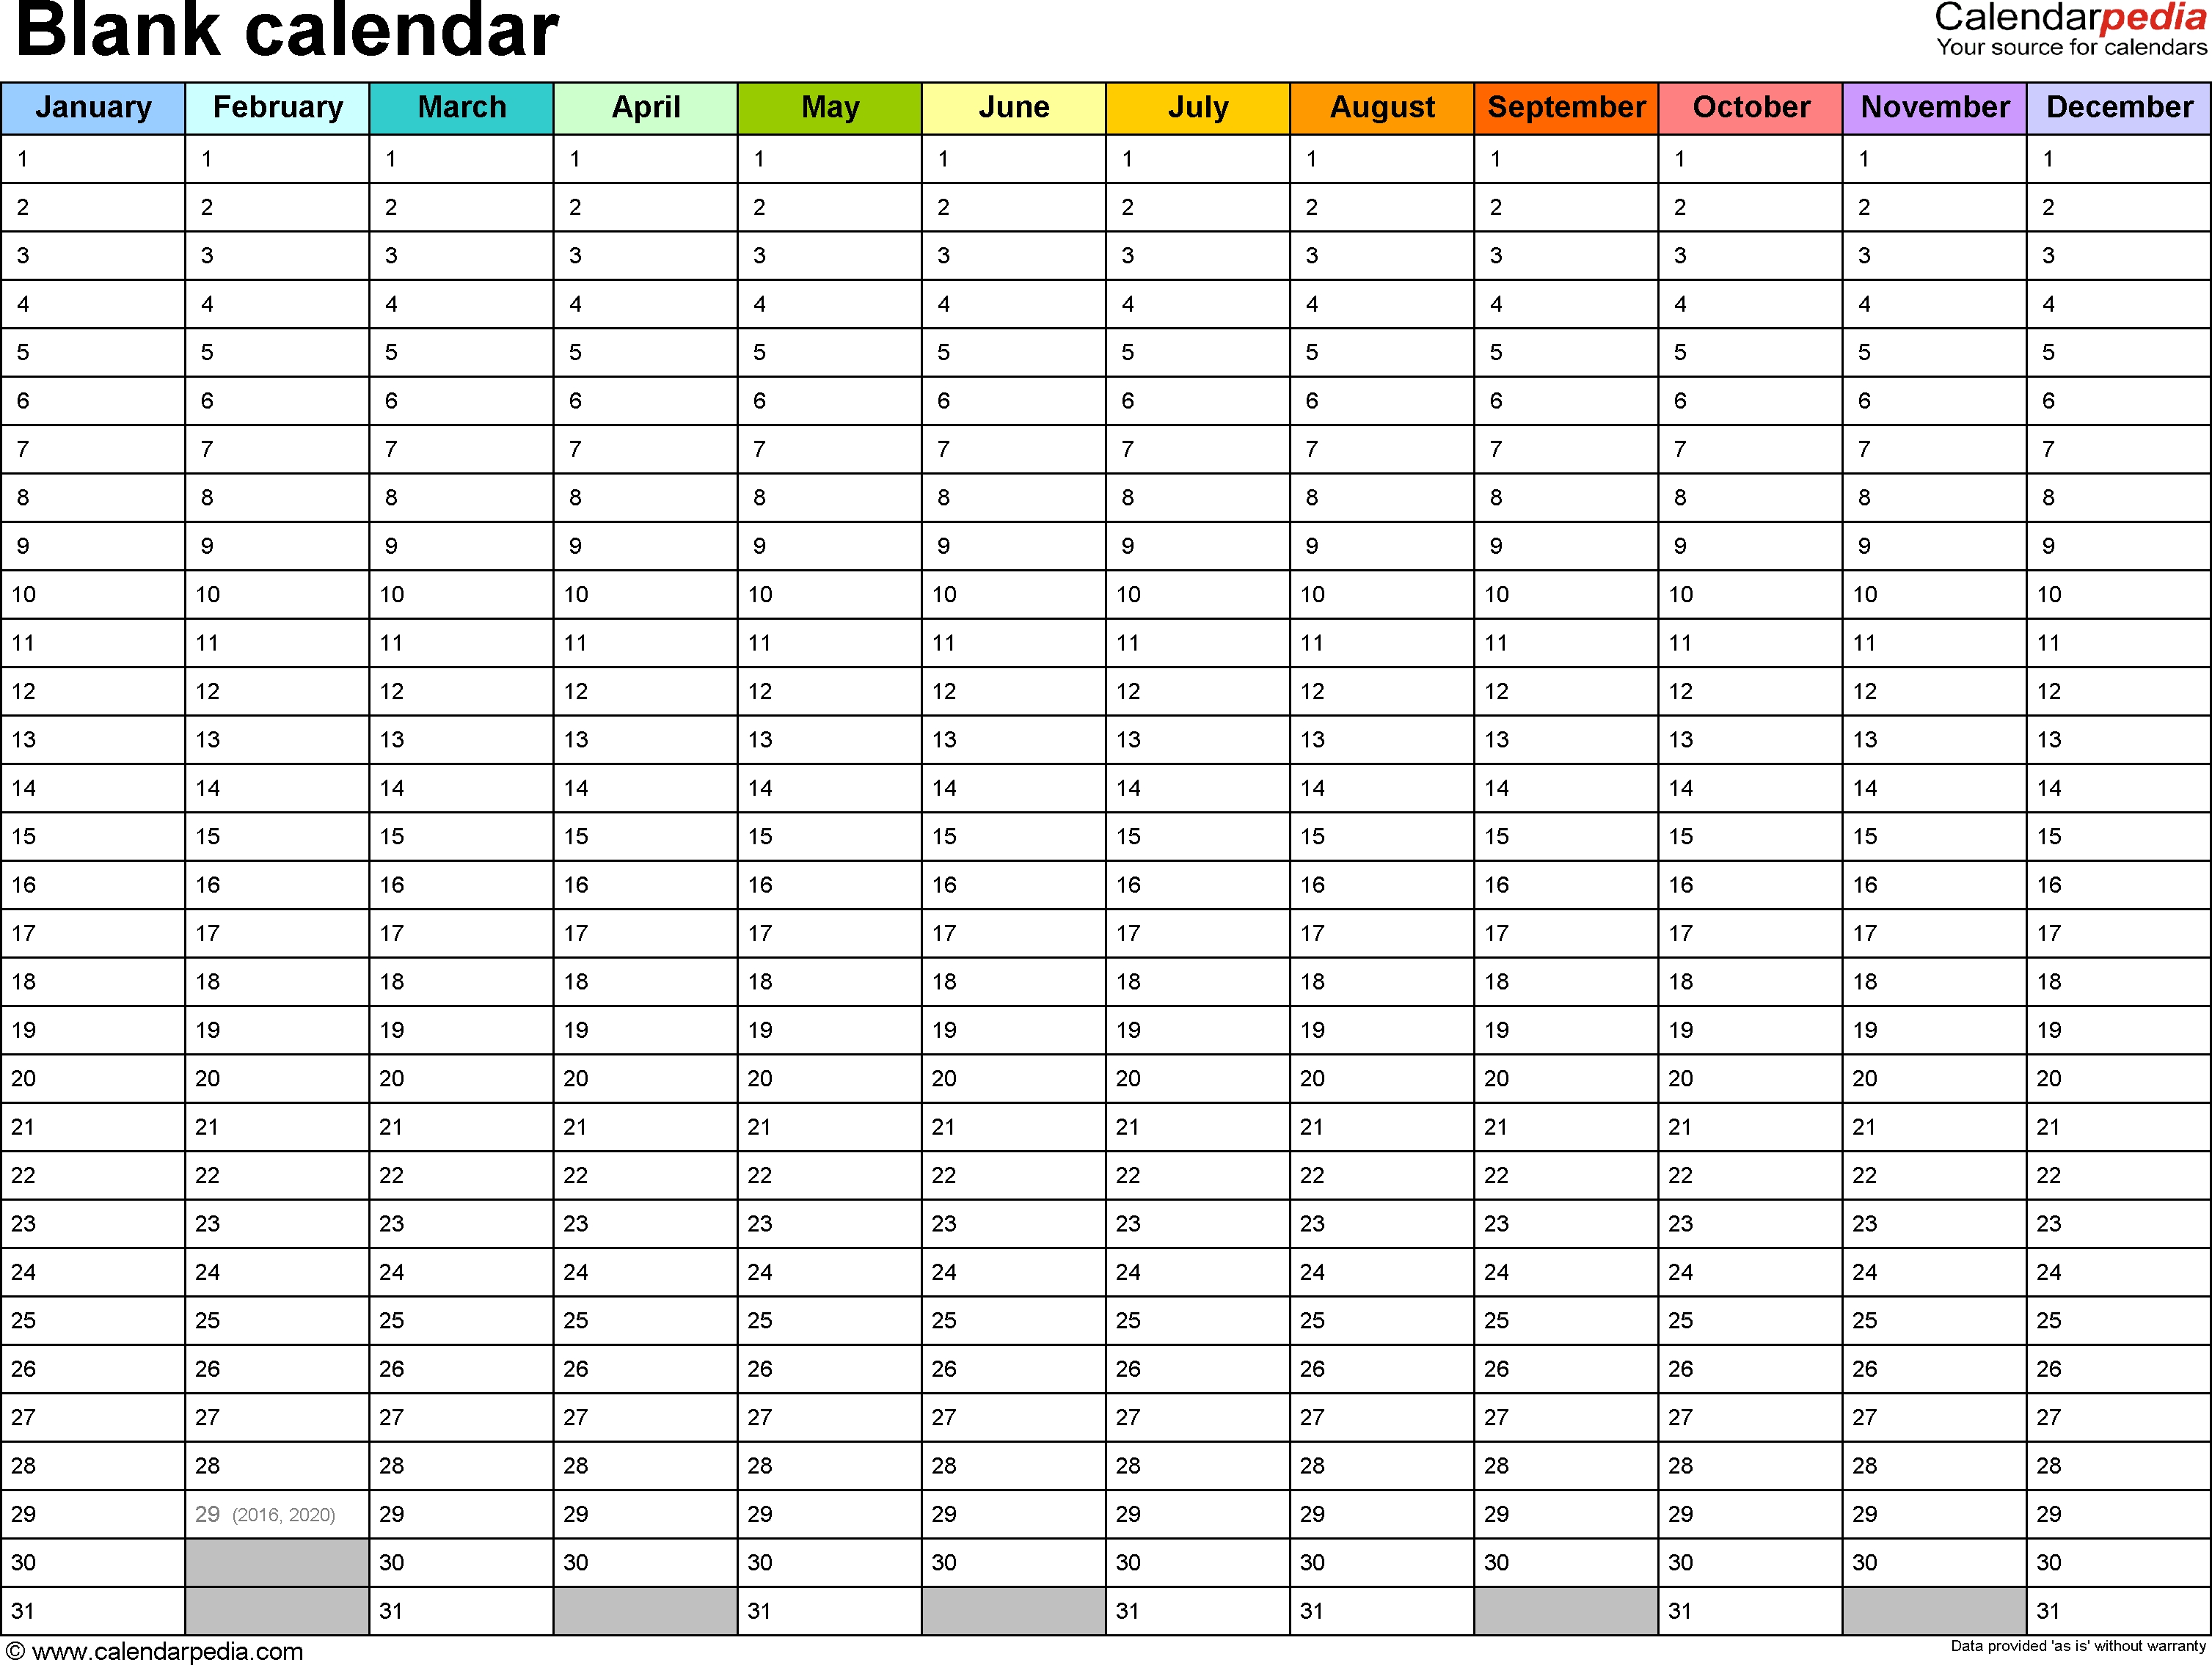 Blank Calendar - 9 Free Printable Microsoft Word Templates pertaining to Blank Lined Weekly Printable Calendar